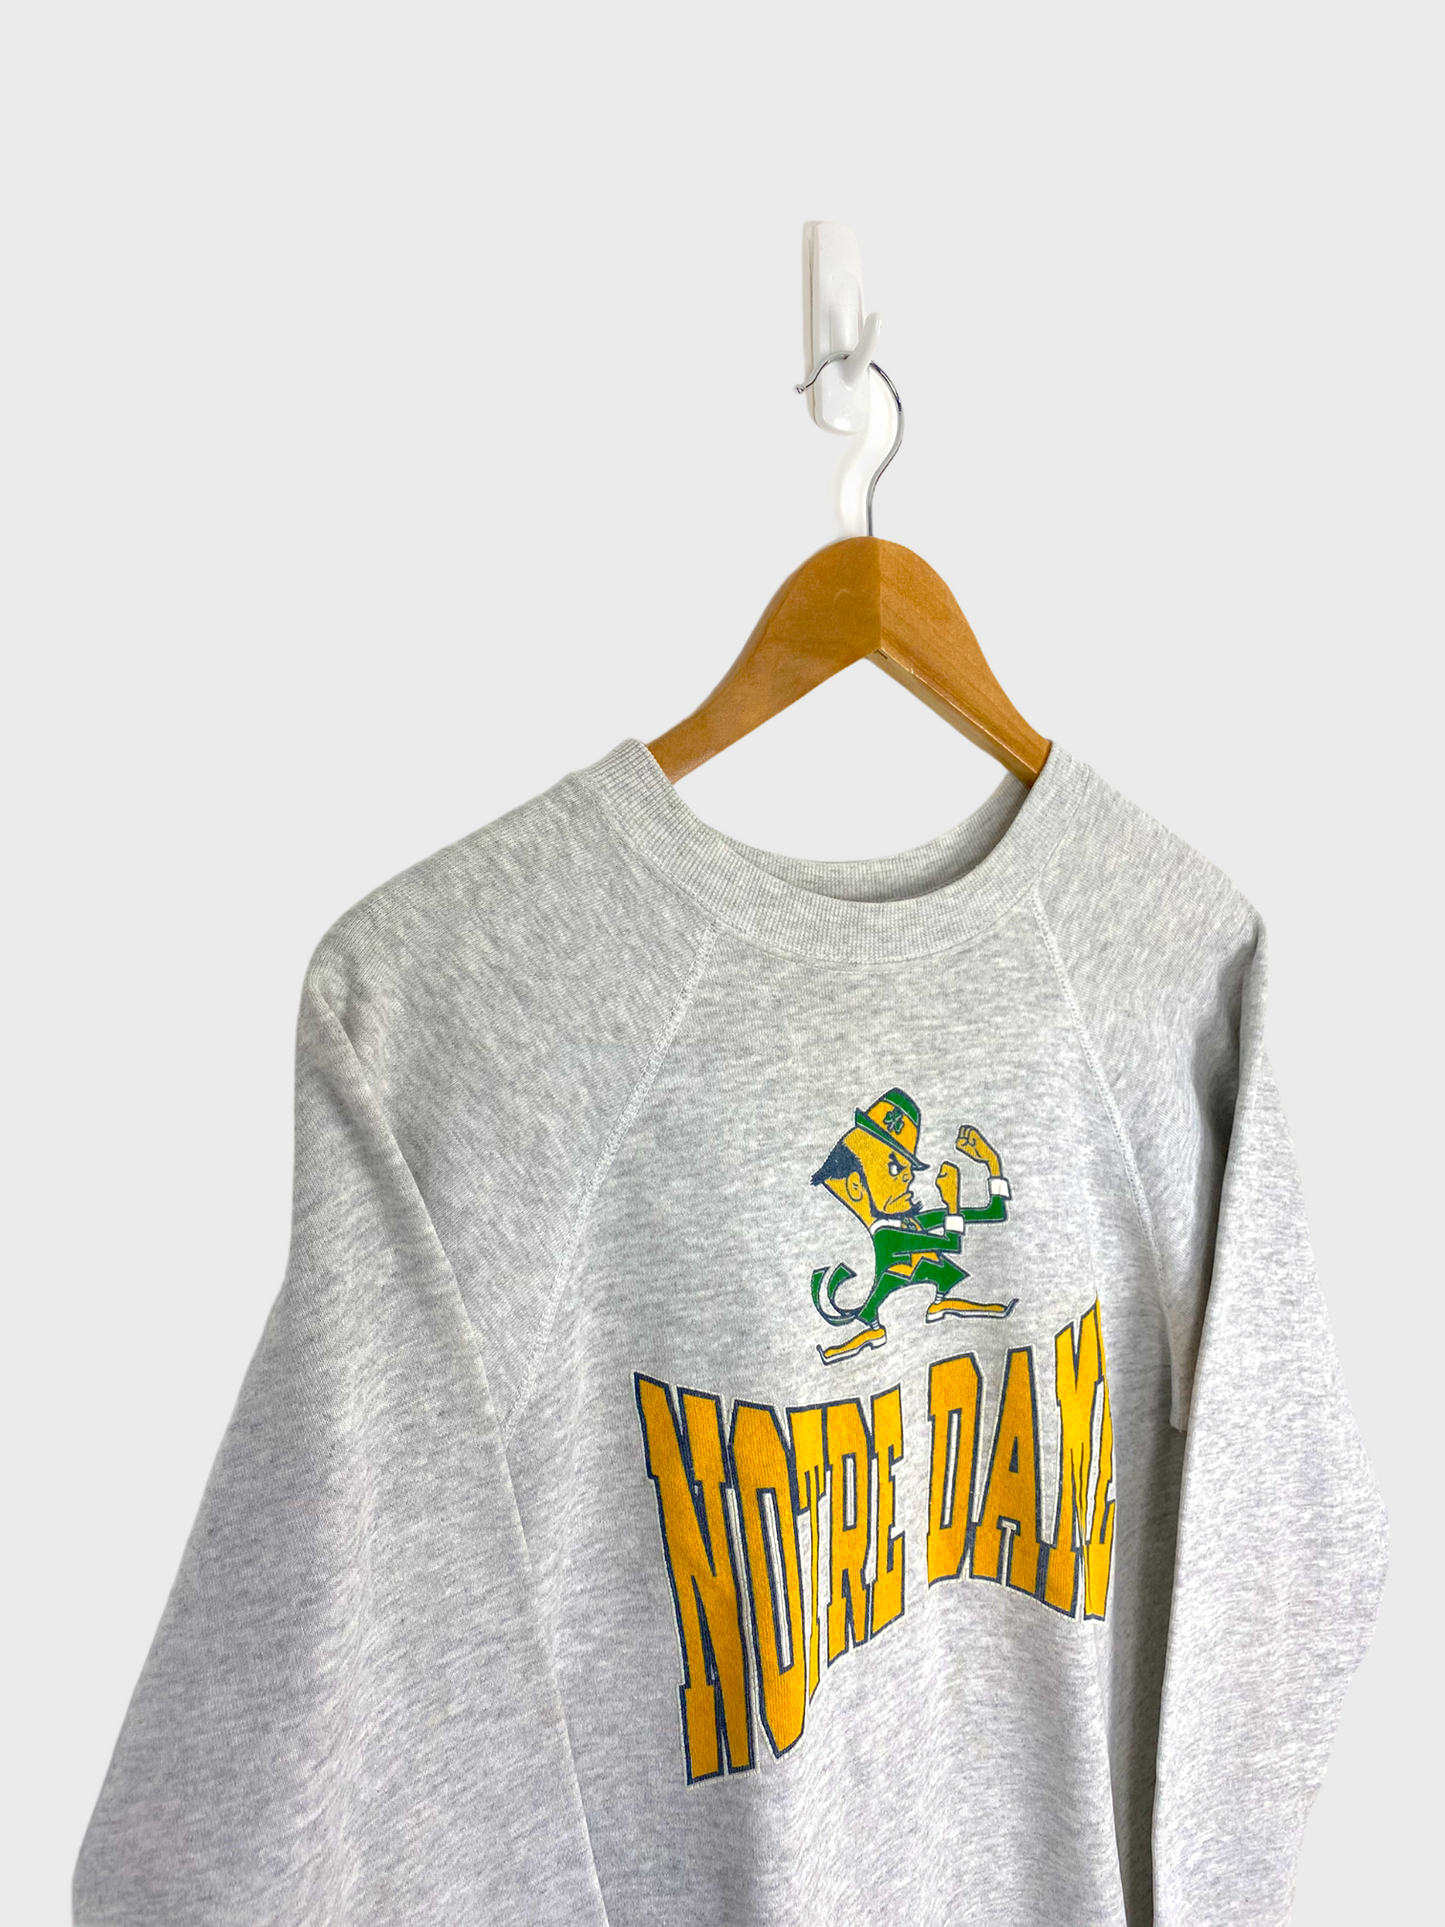 Notre Dame University Vintage Sweatshirt Size 6-8